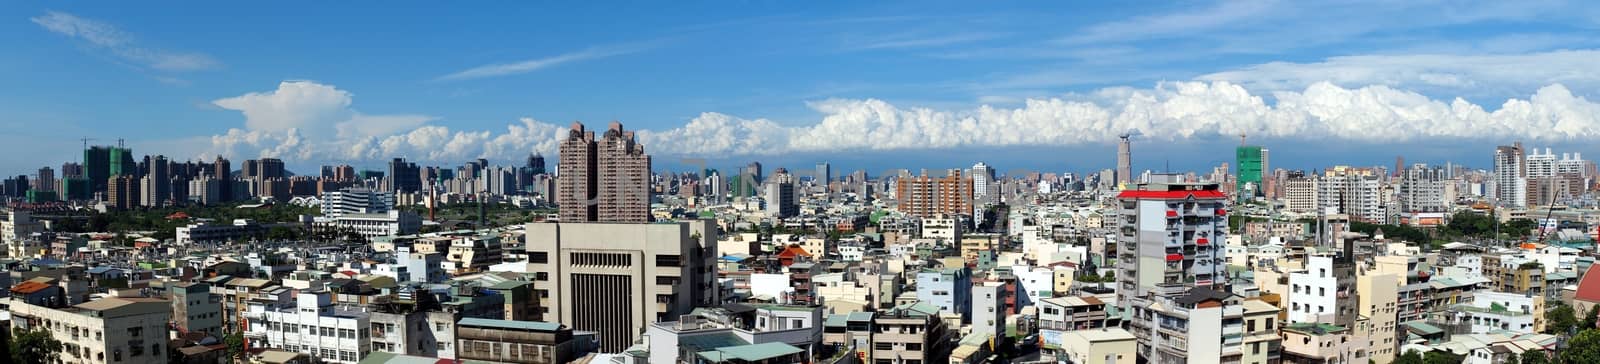 Panorama of Kaohsiung city in Taiwan by shiyali